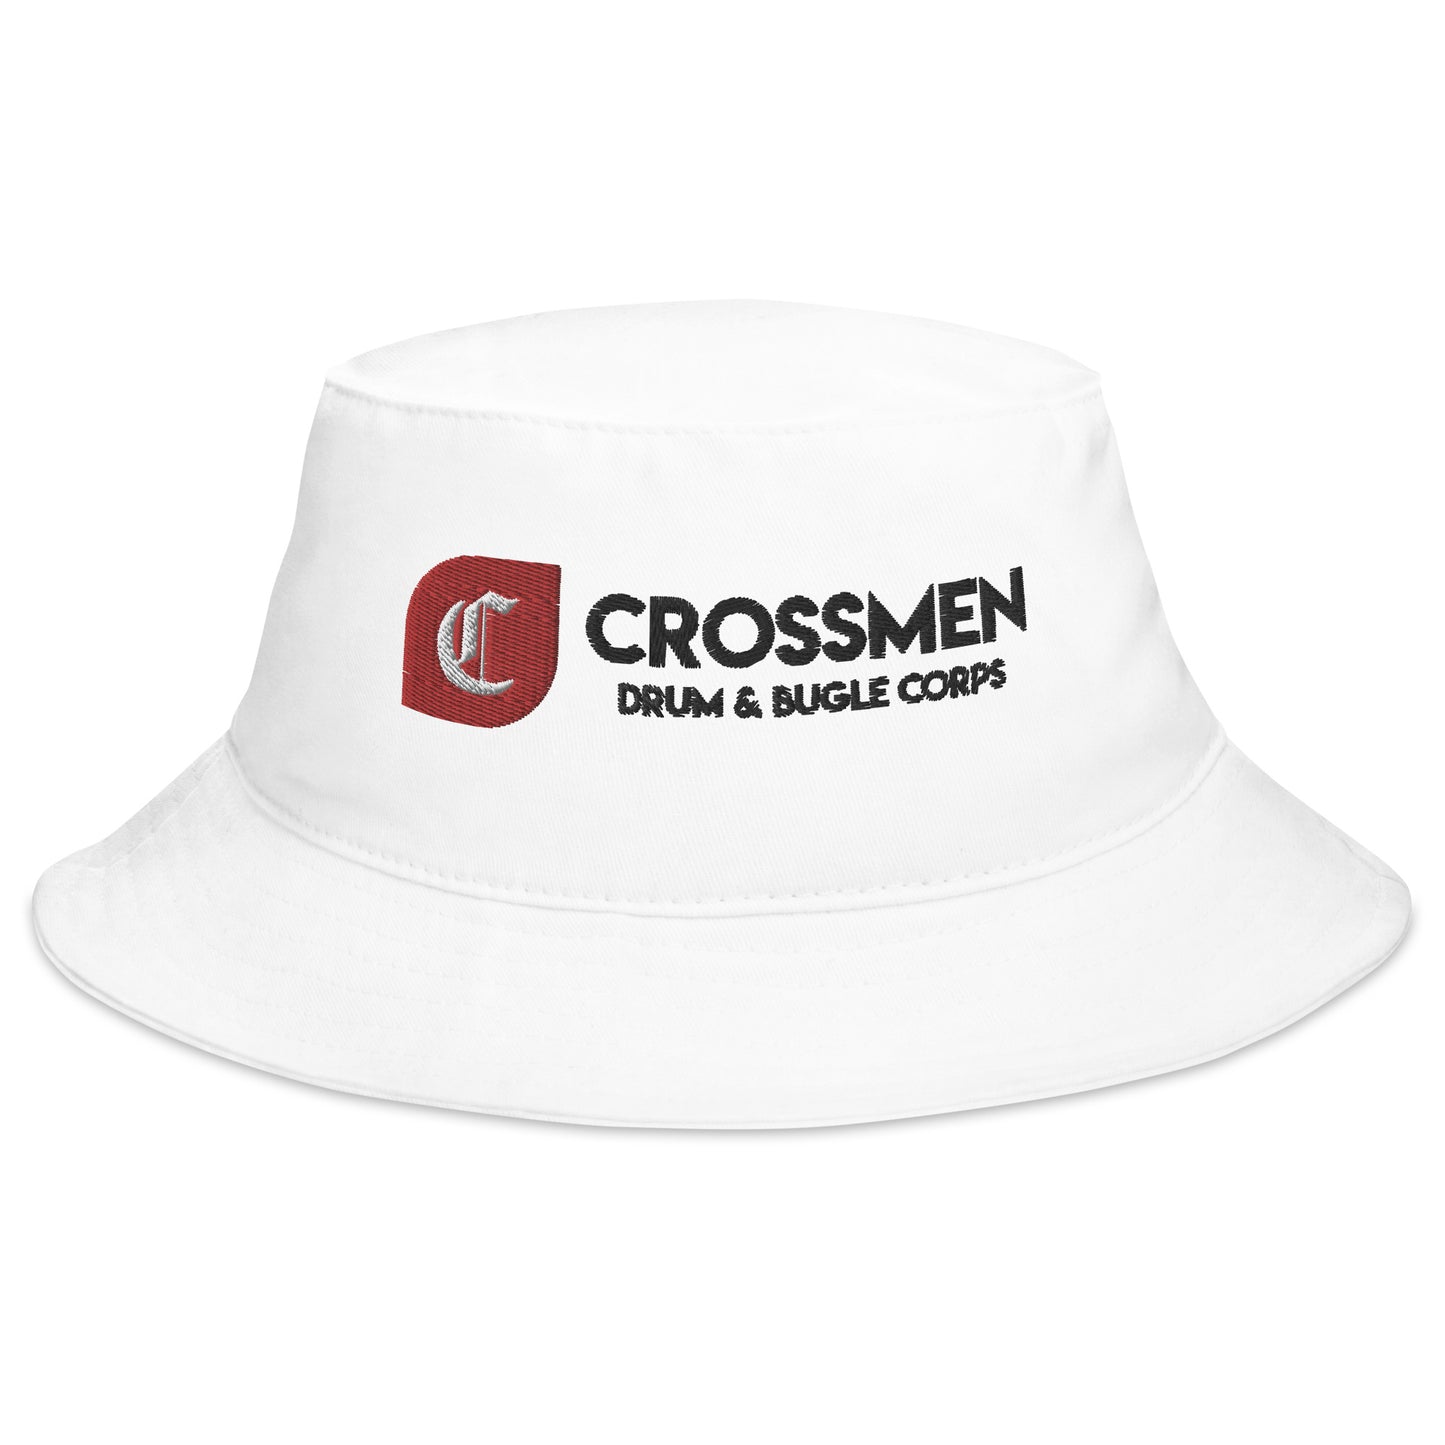 Crossmen Drum & Bugle Corps Bucket Hat - White